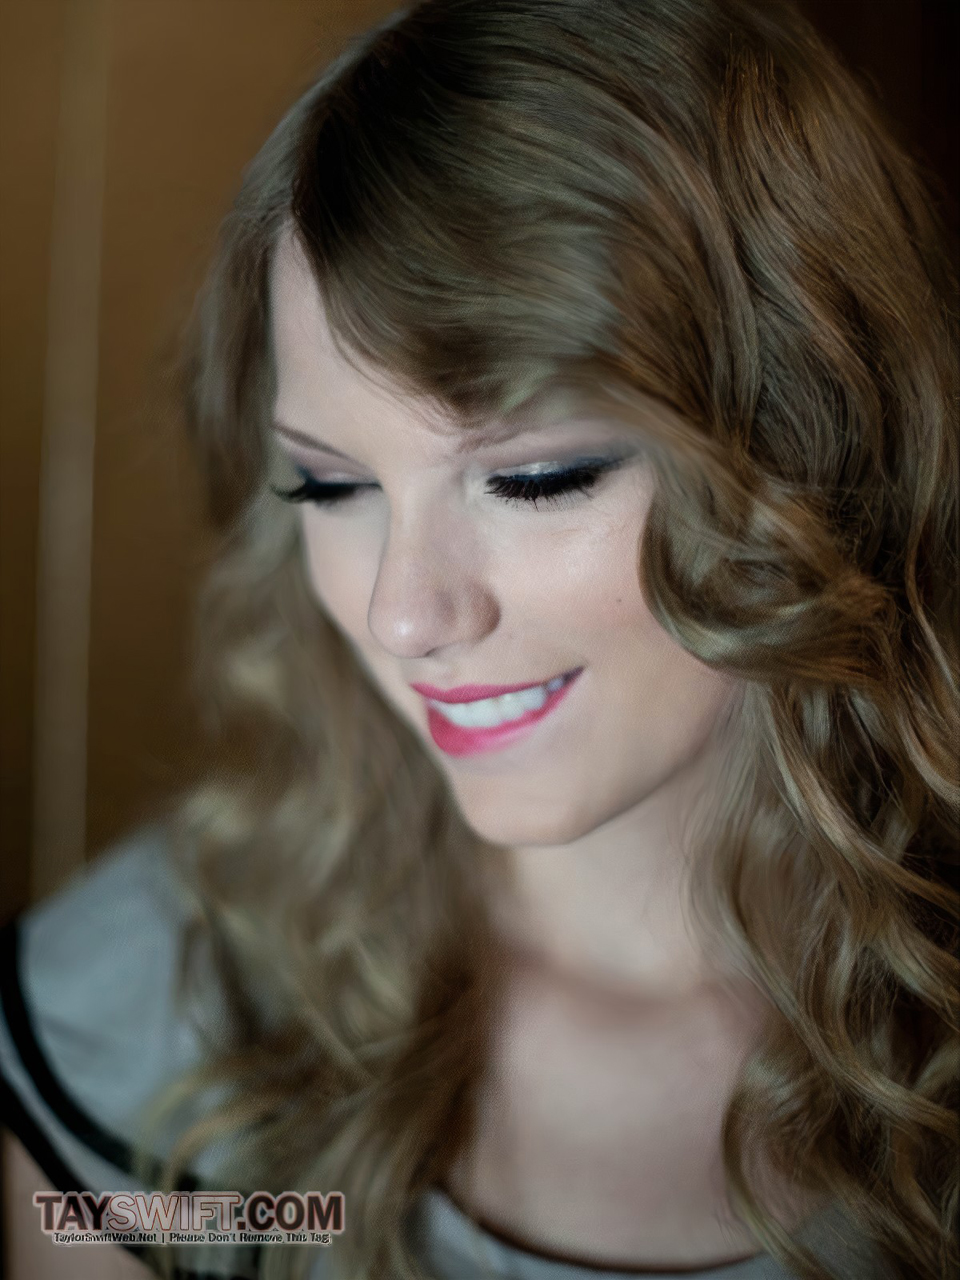 Taylor Swift Women Blonde Singer Long Hair Face Indoors Smiling Biting Lip 960x1280